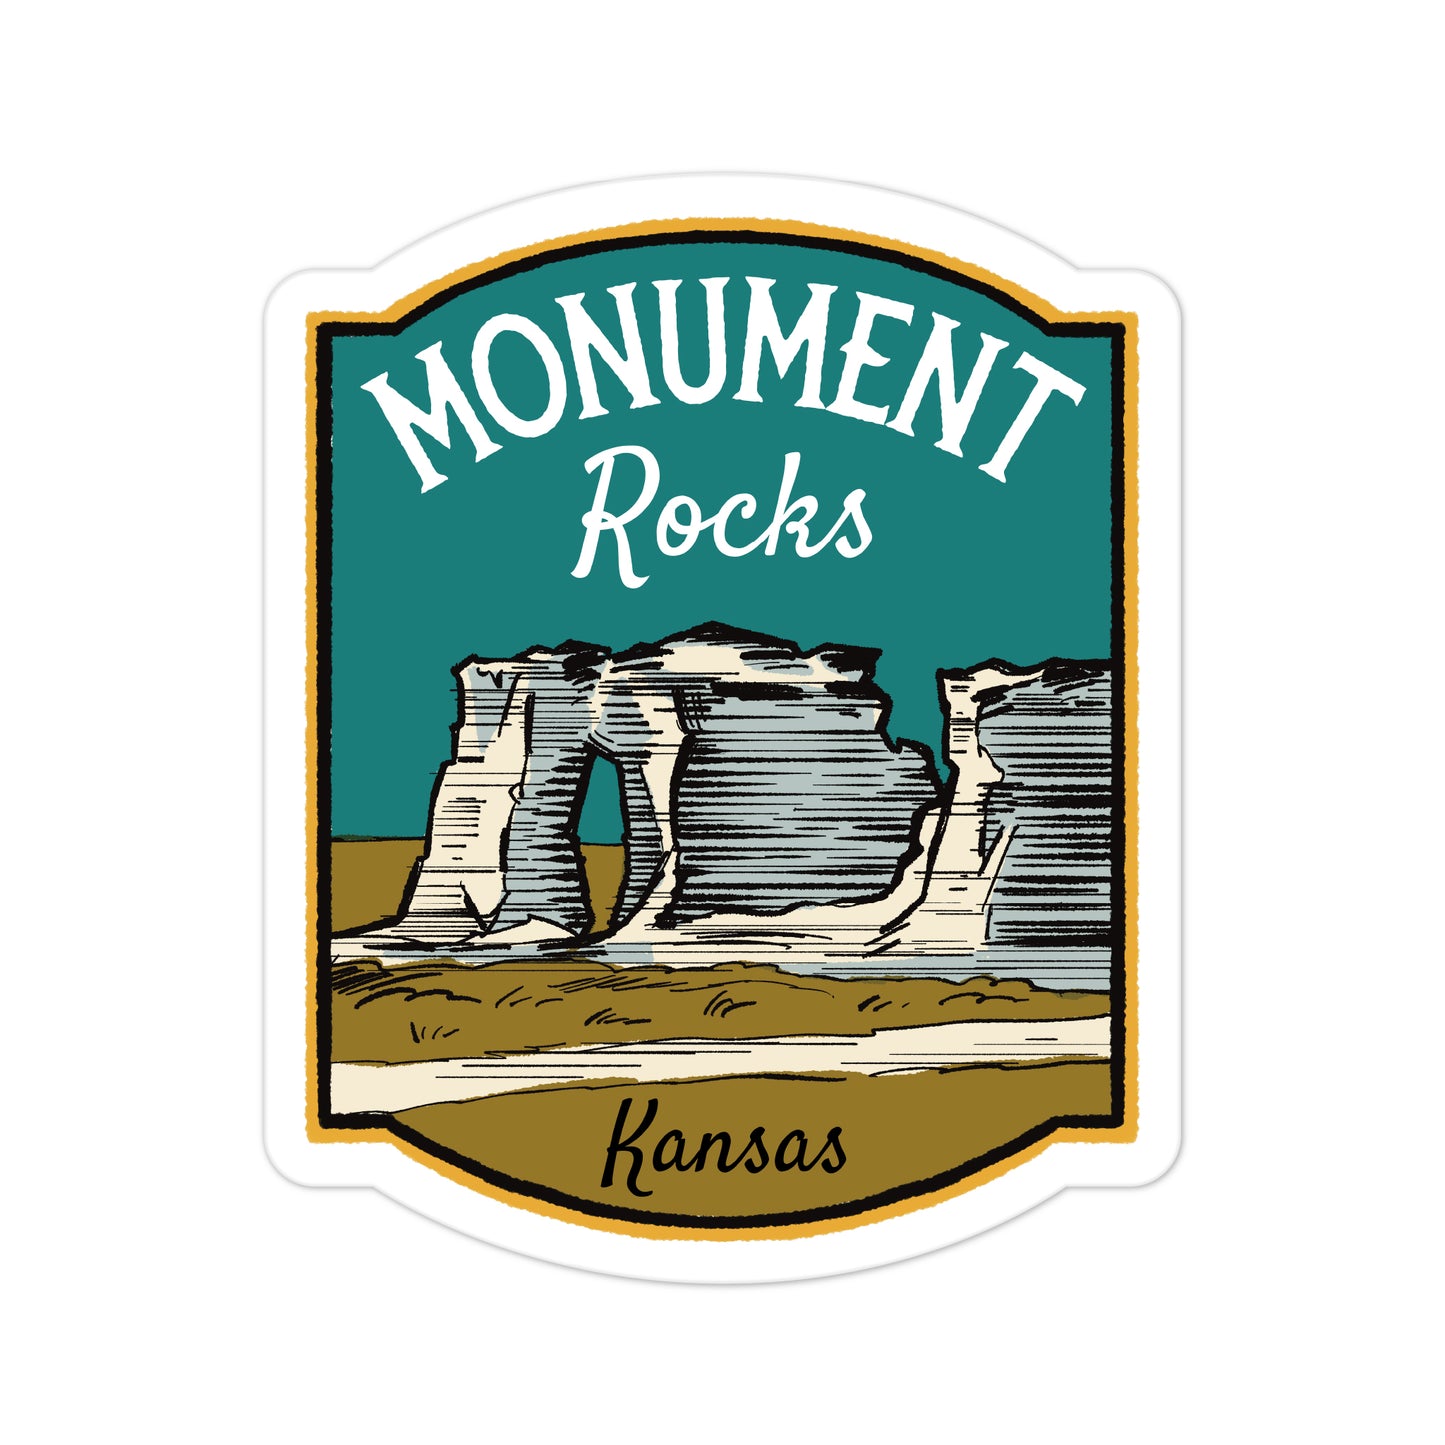 A sticker of Monument Rocks Kansas